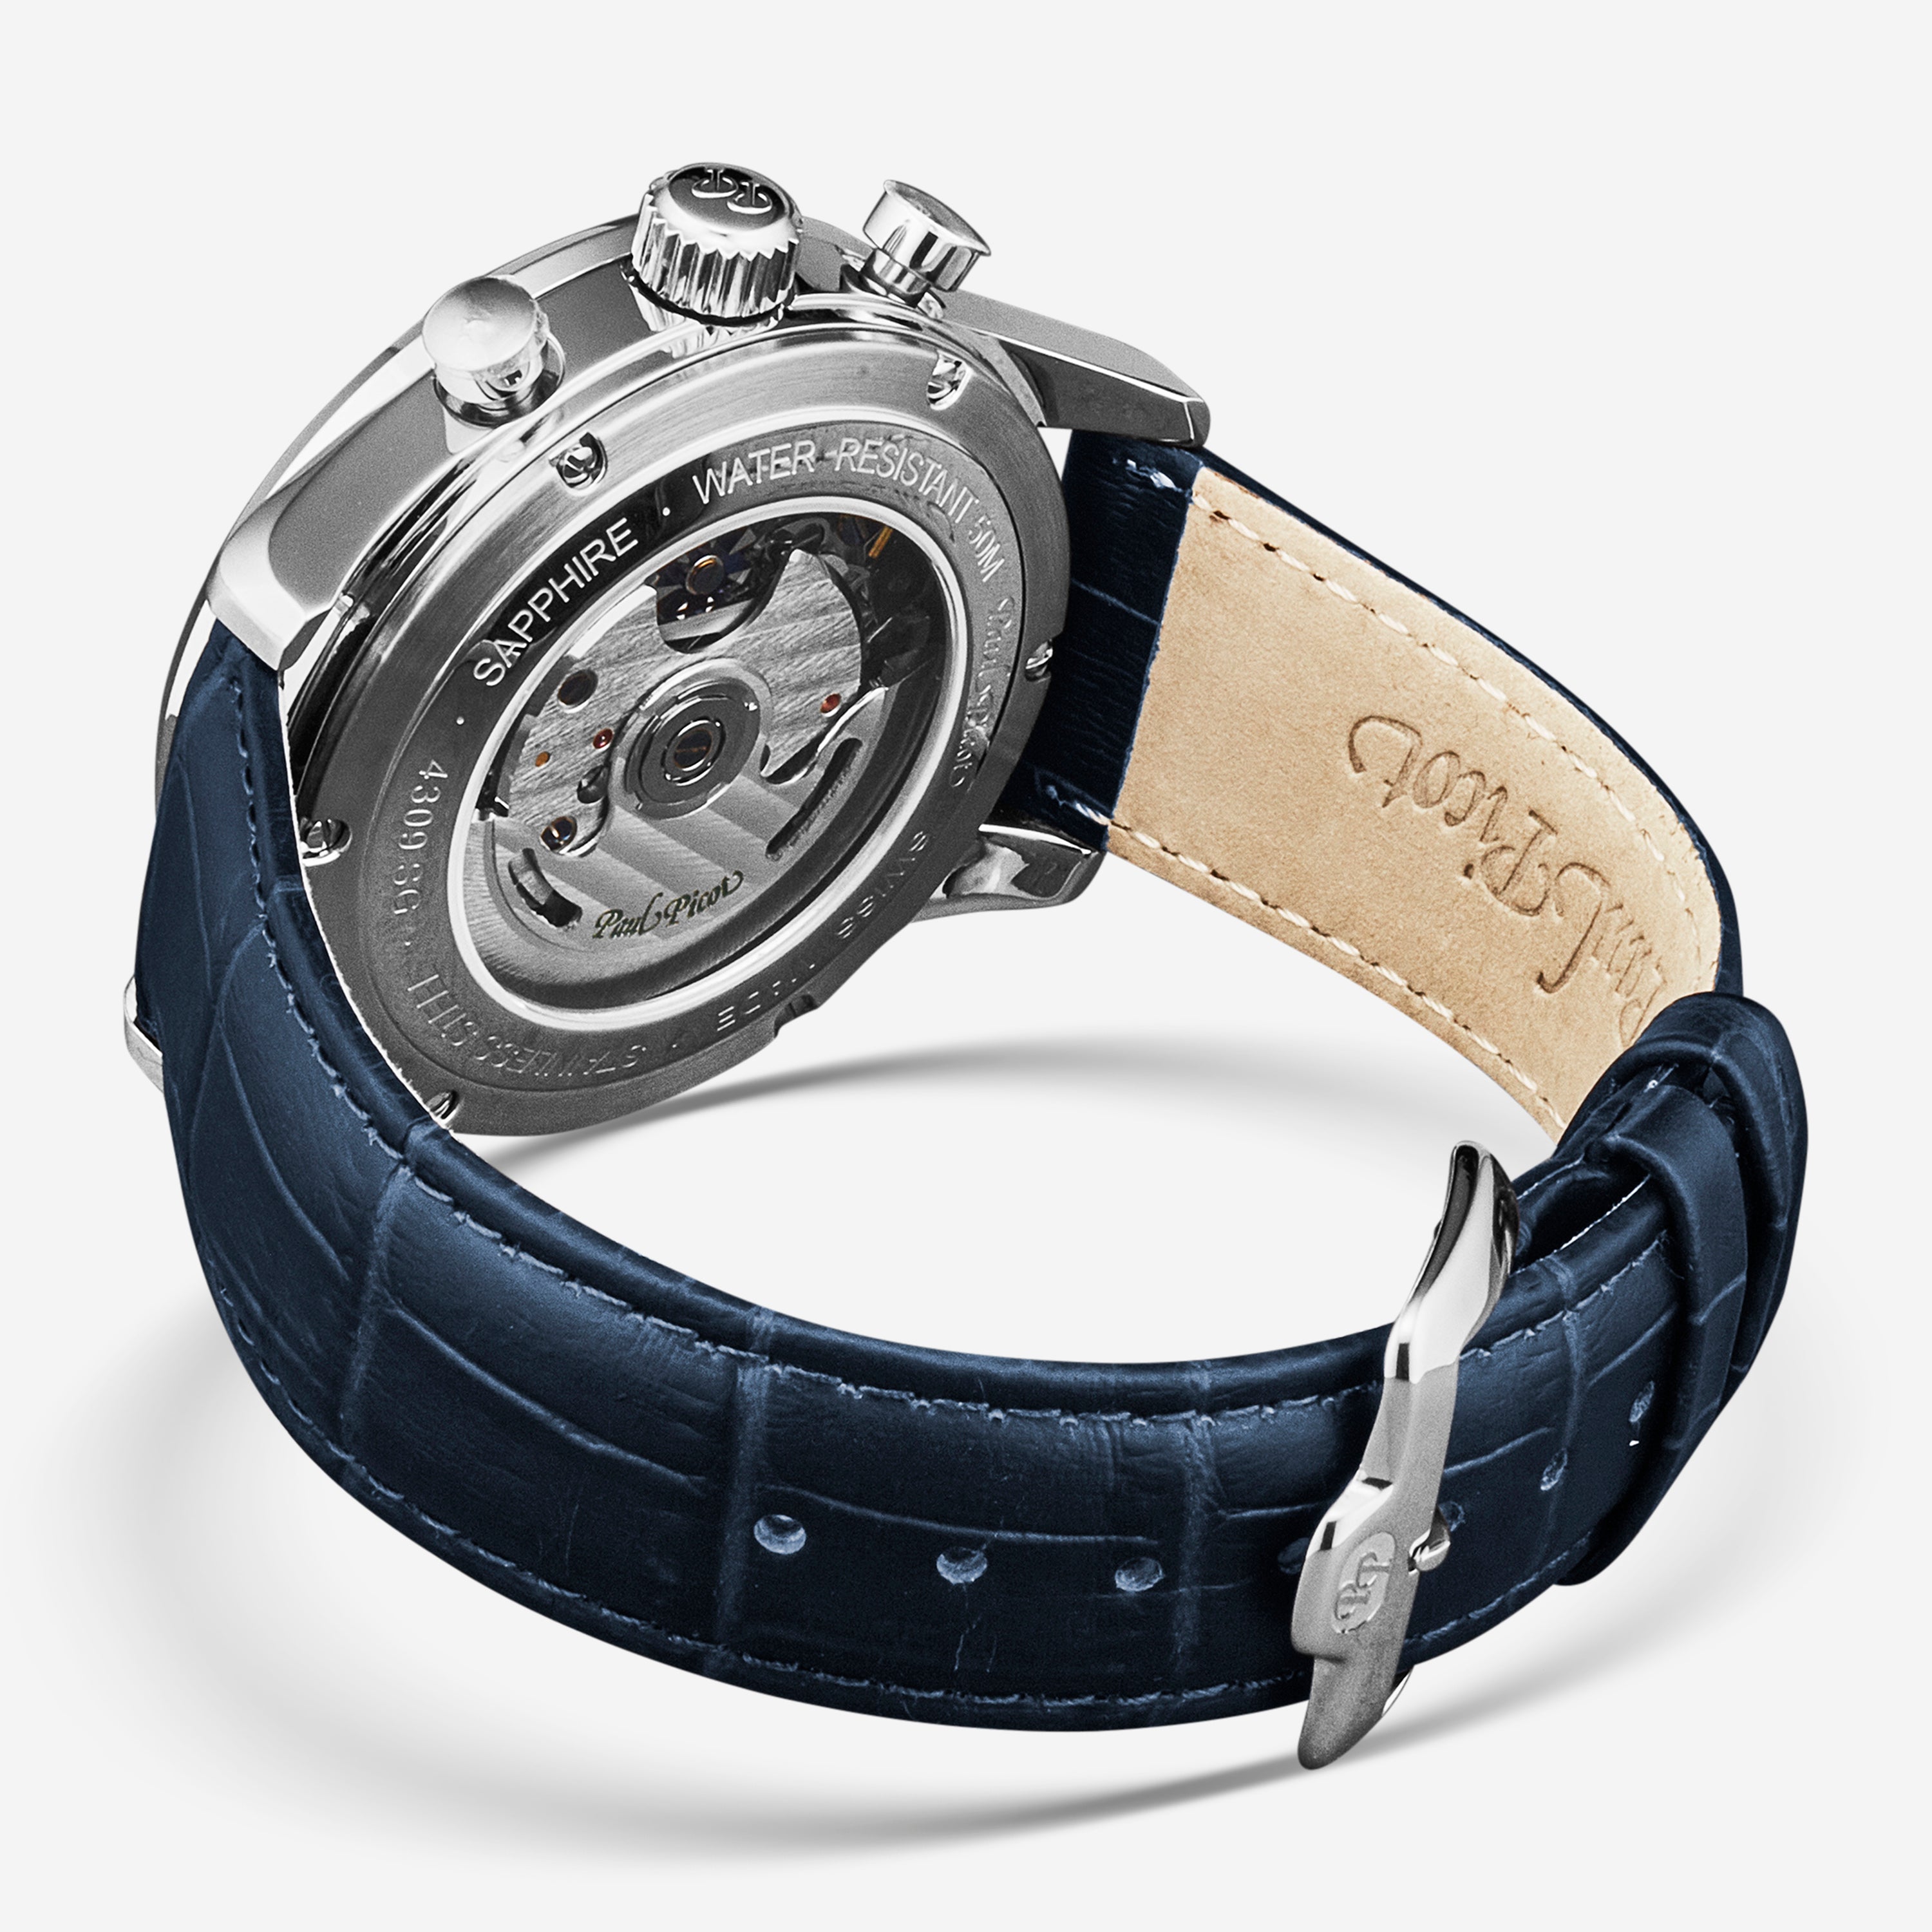 Paul Picot Gentleman Blazer Chronograph Blue Dial Men's Automatic Watch P4309.SG.1131.2614